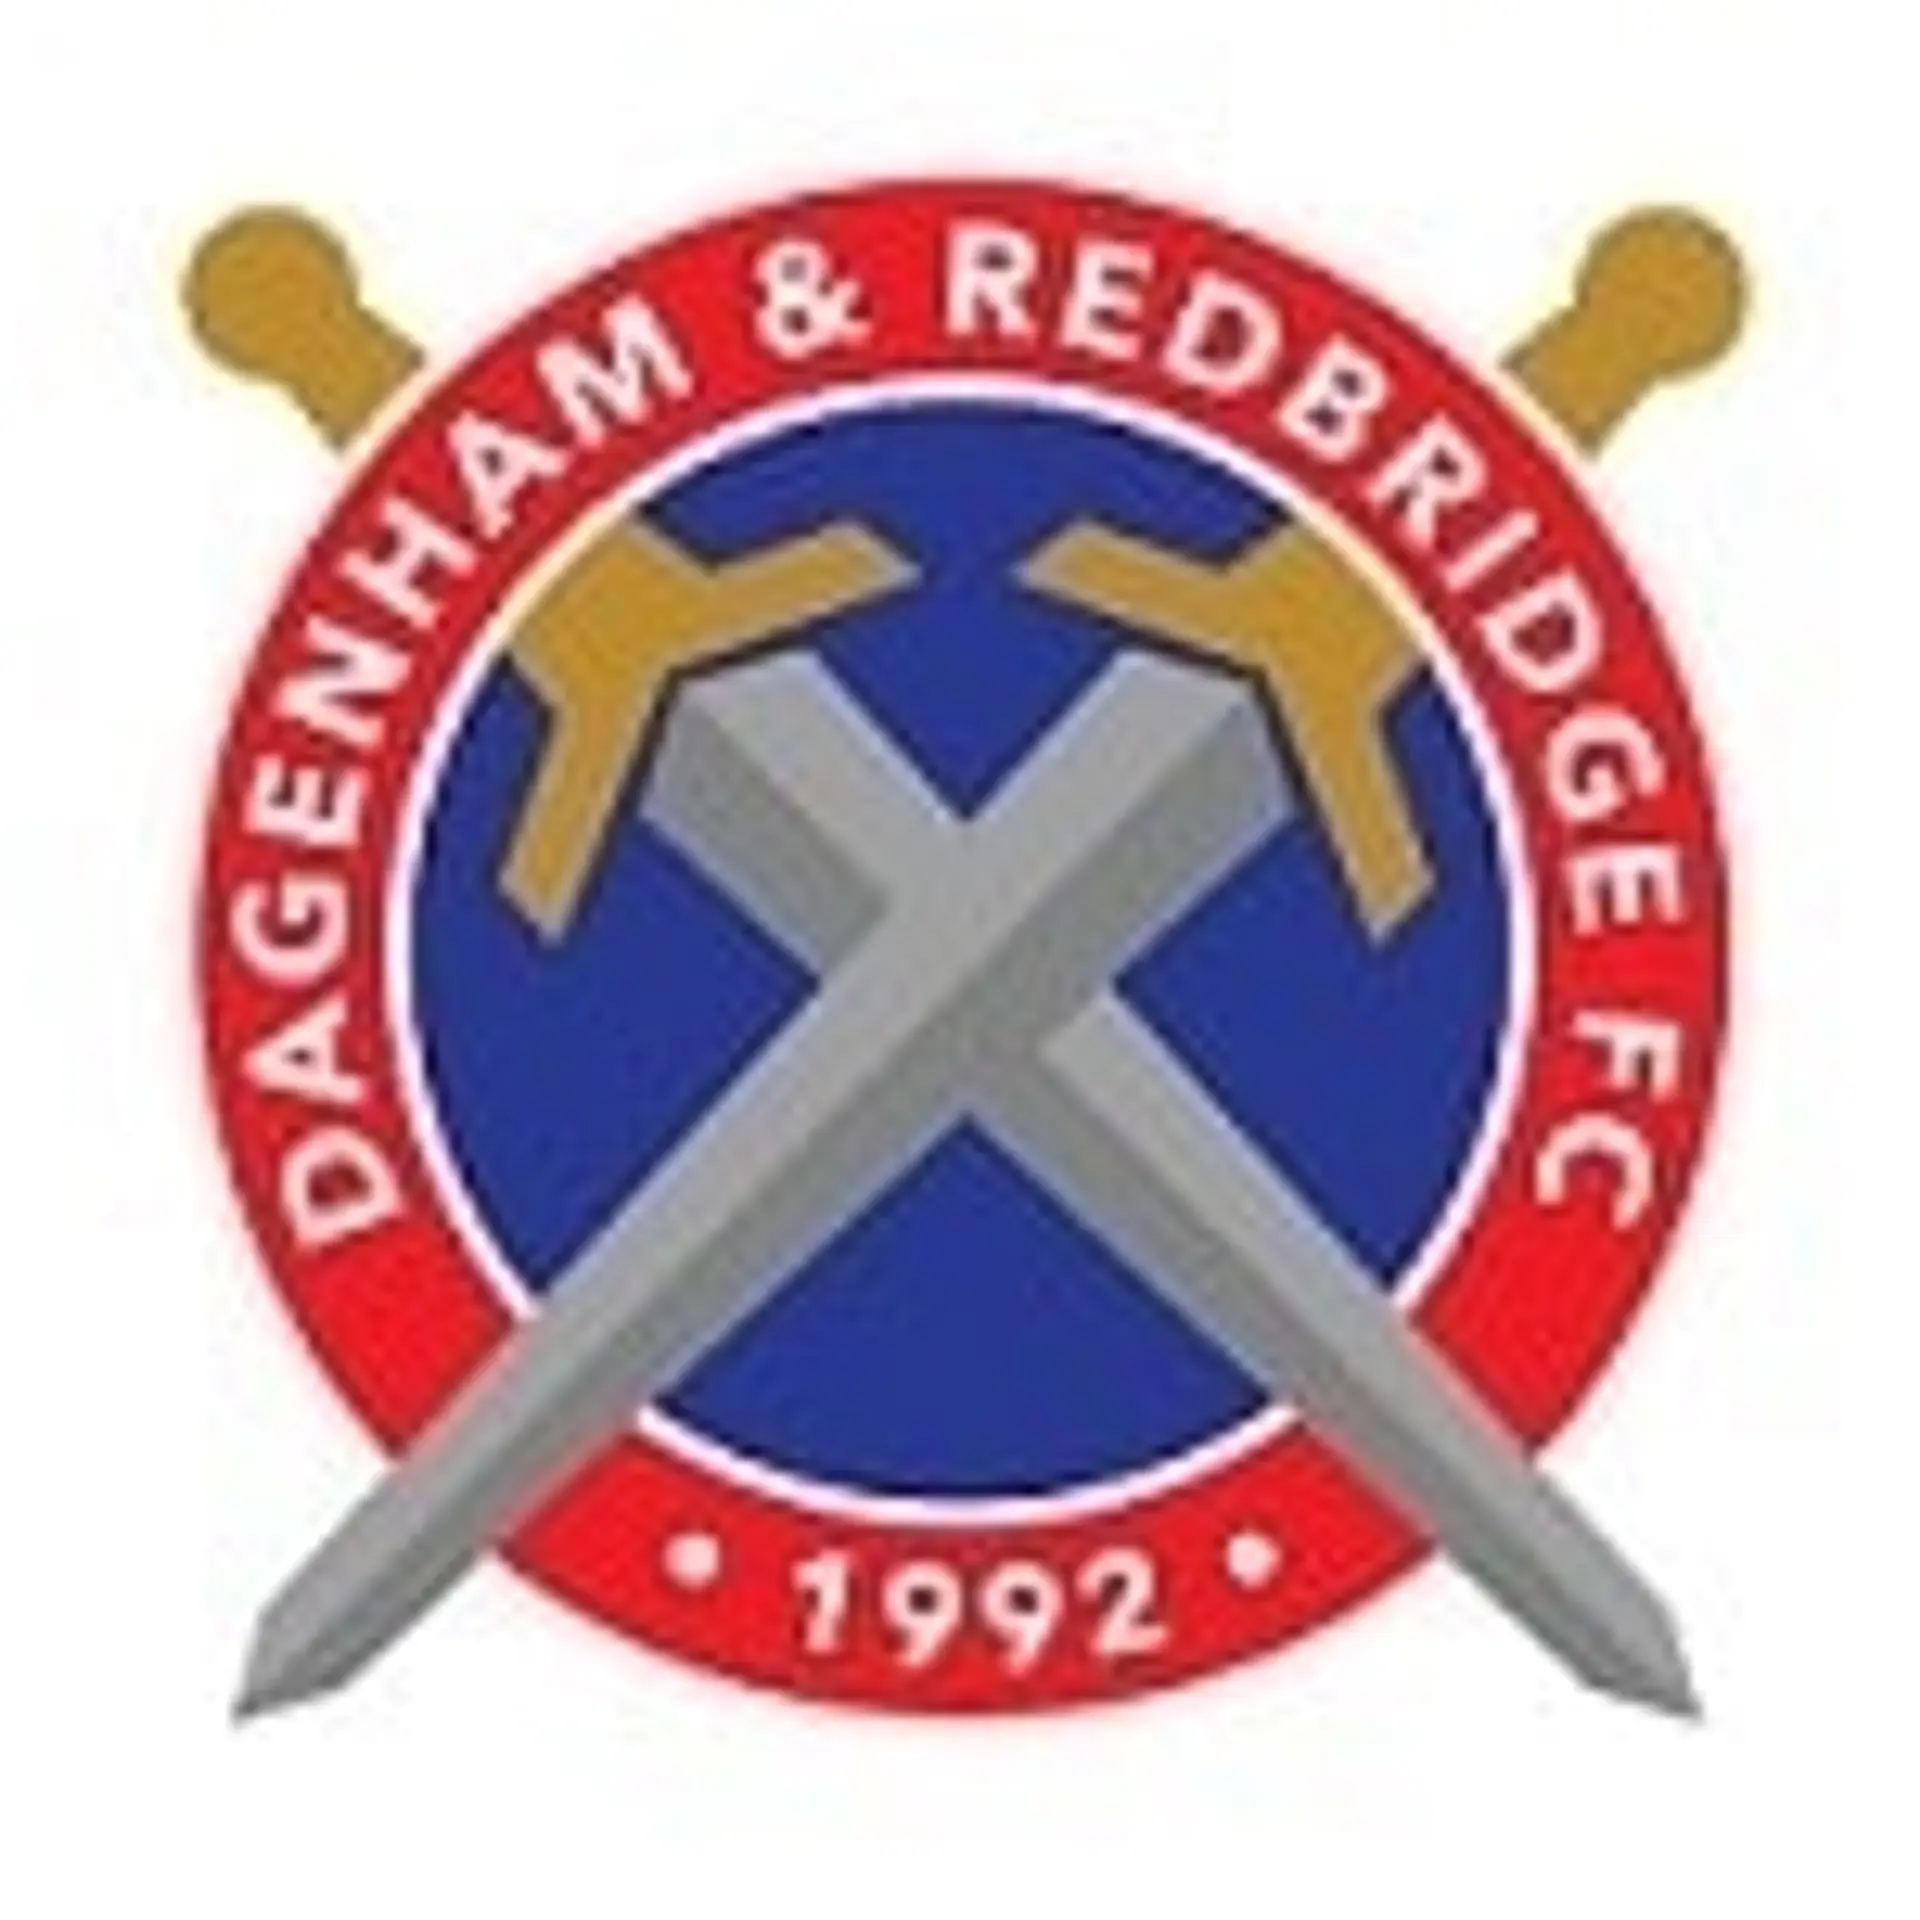 Dagenham & Redbridge Plantilla